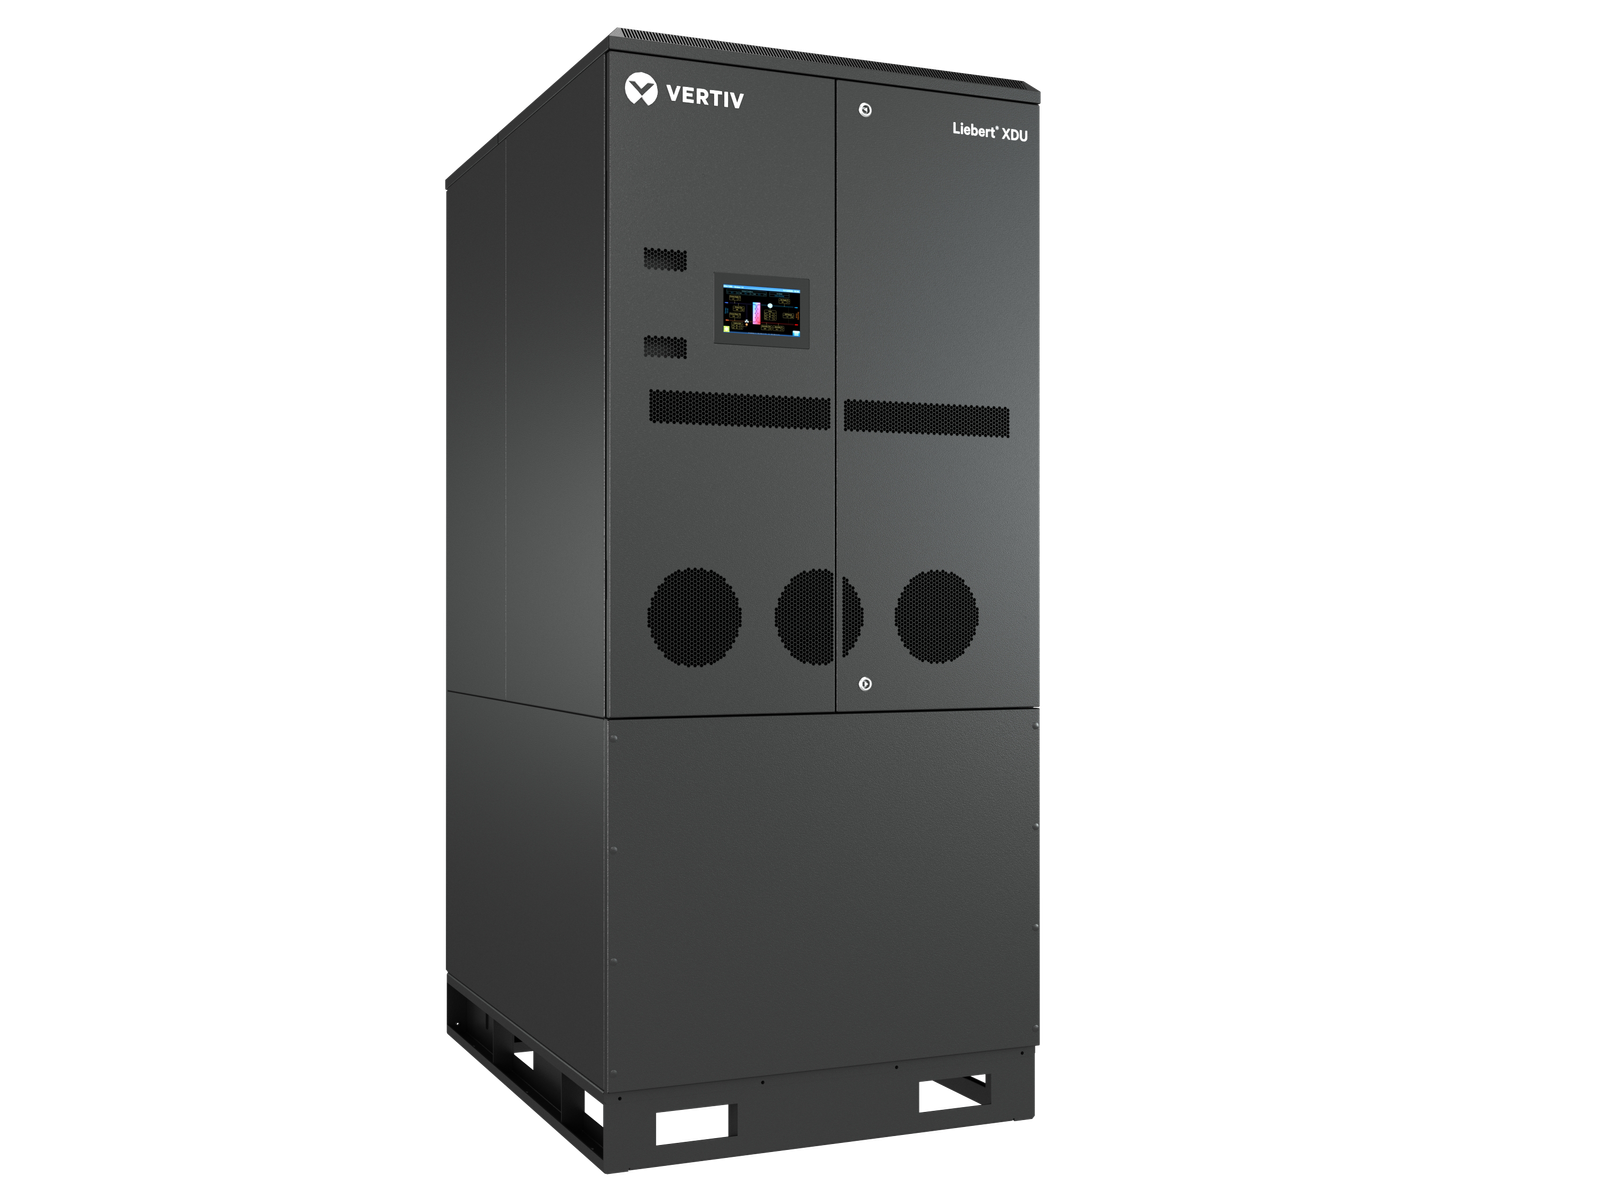 Vertiv introduces efficient liquid cooling solution for EMEA data centres